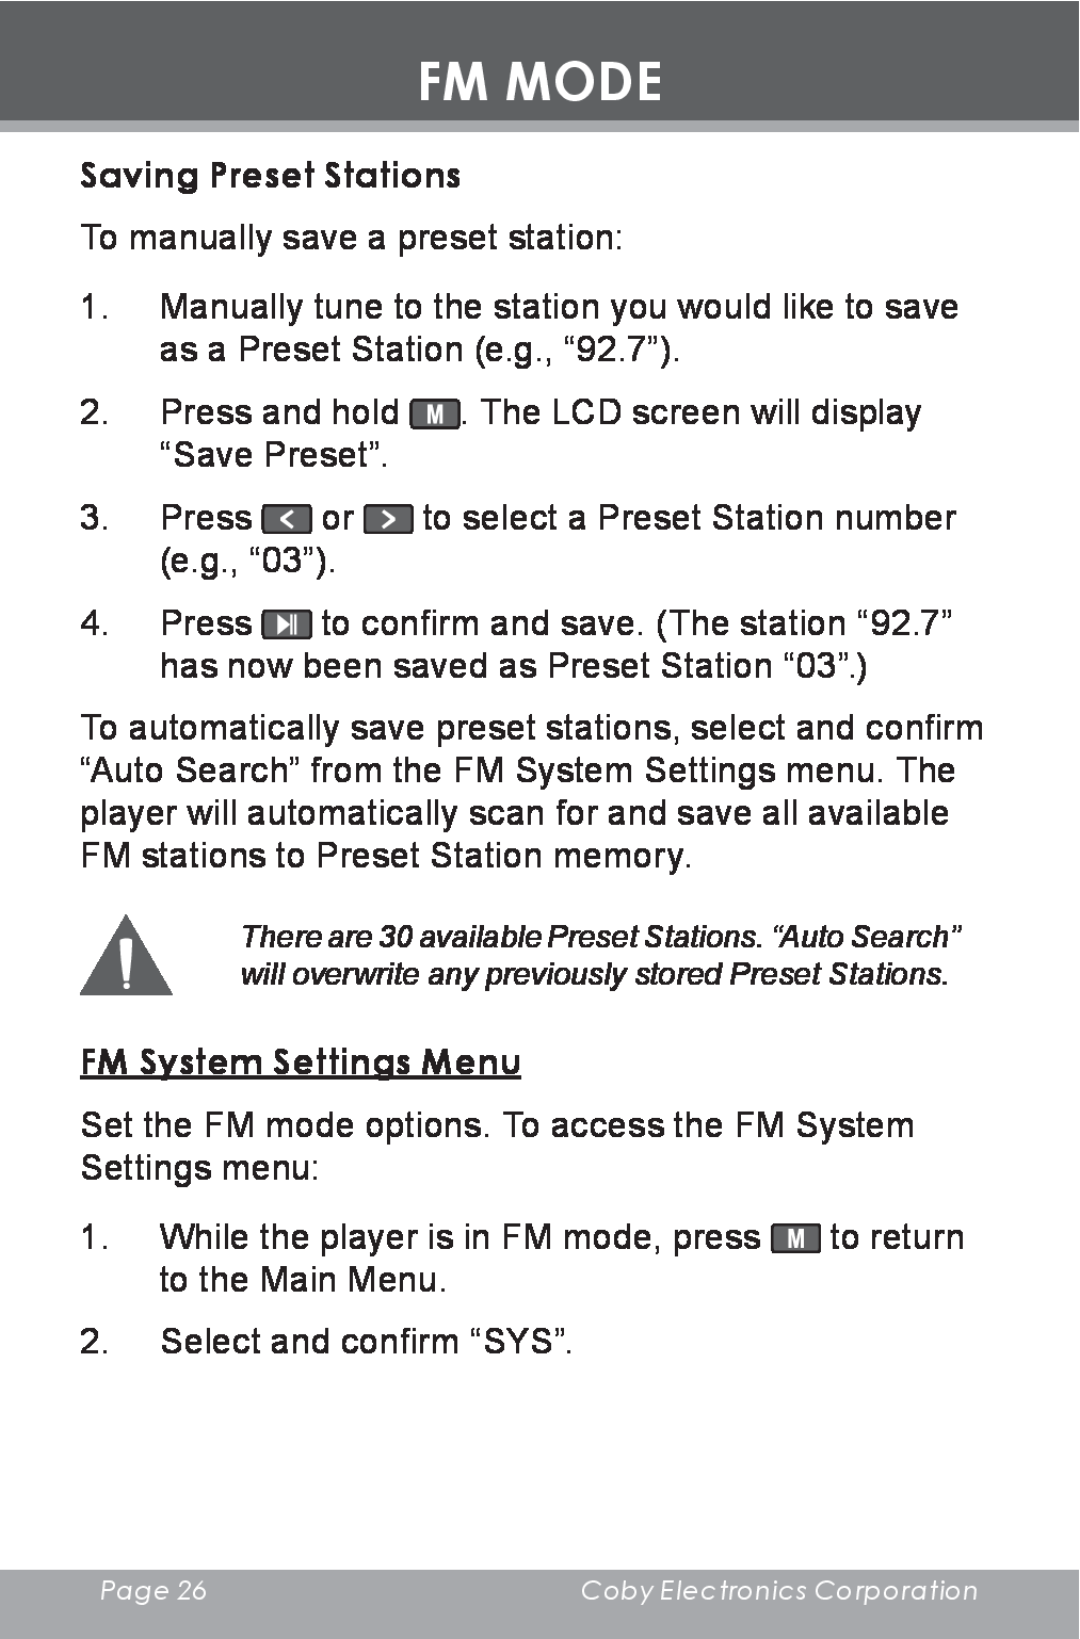 COBY electronic MP-C643 instruction manual Saving Preset Stations, FM System Settings Menu, Fm Mode 